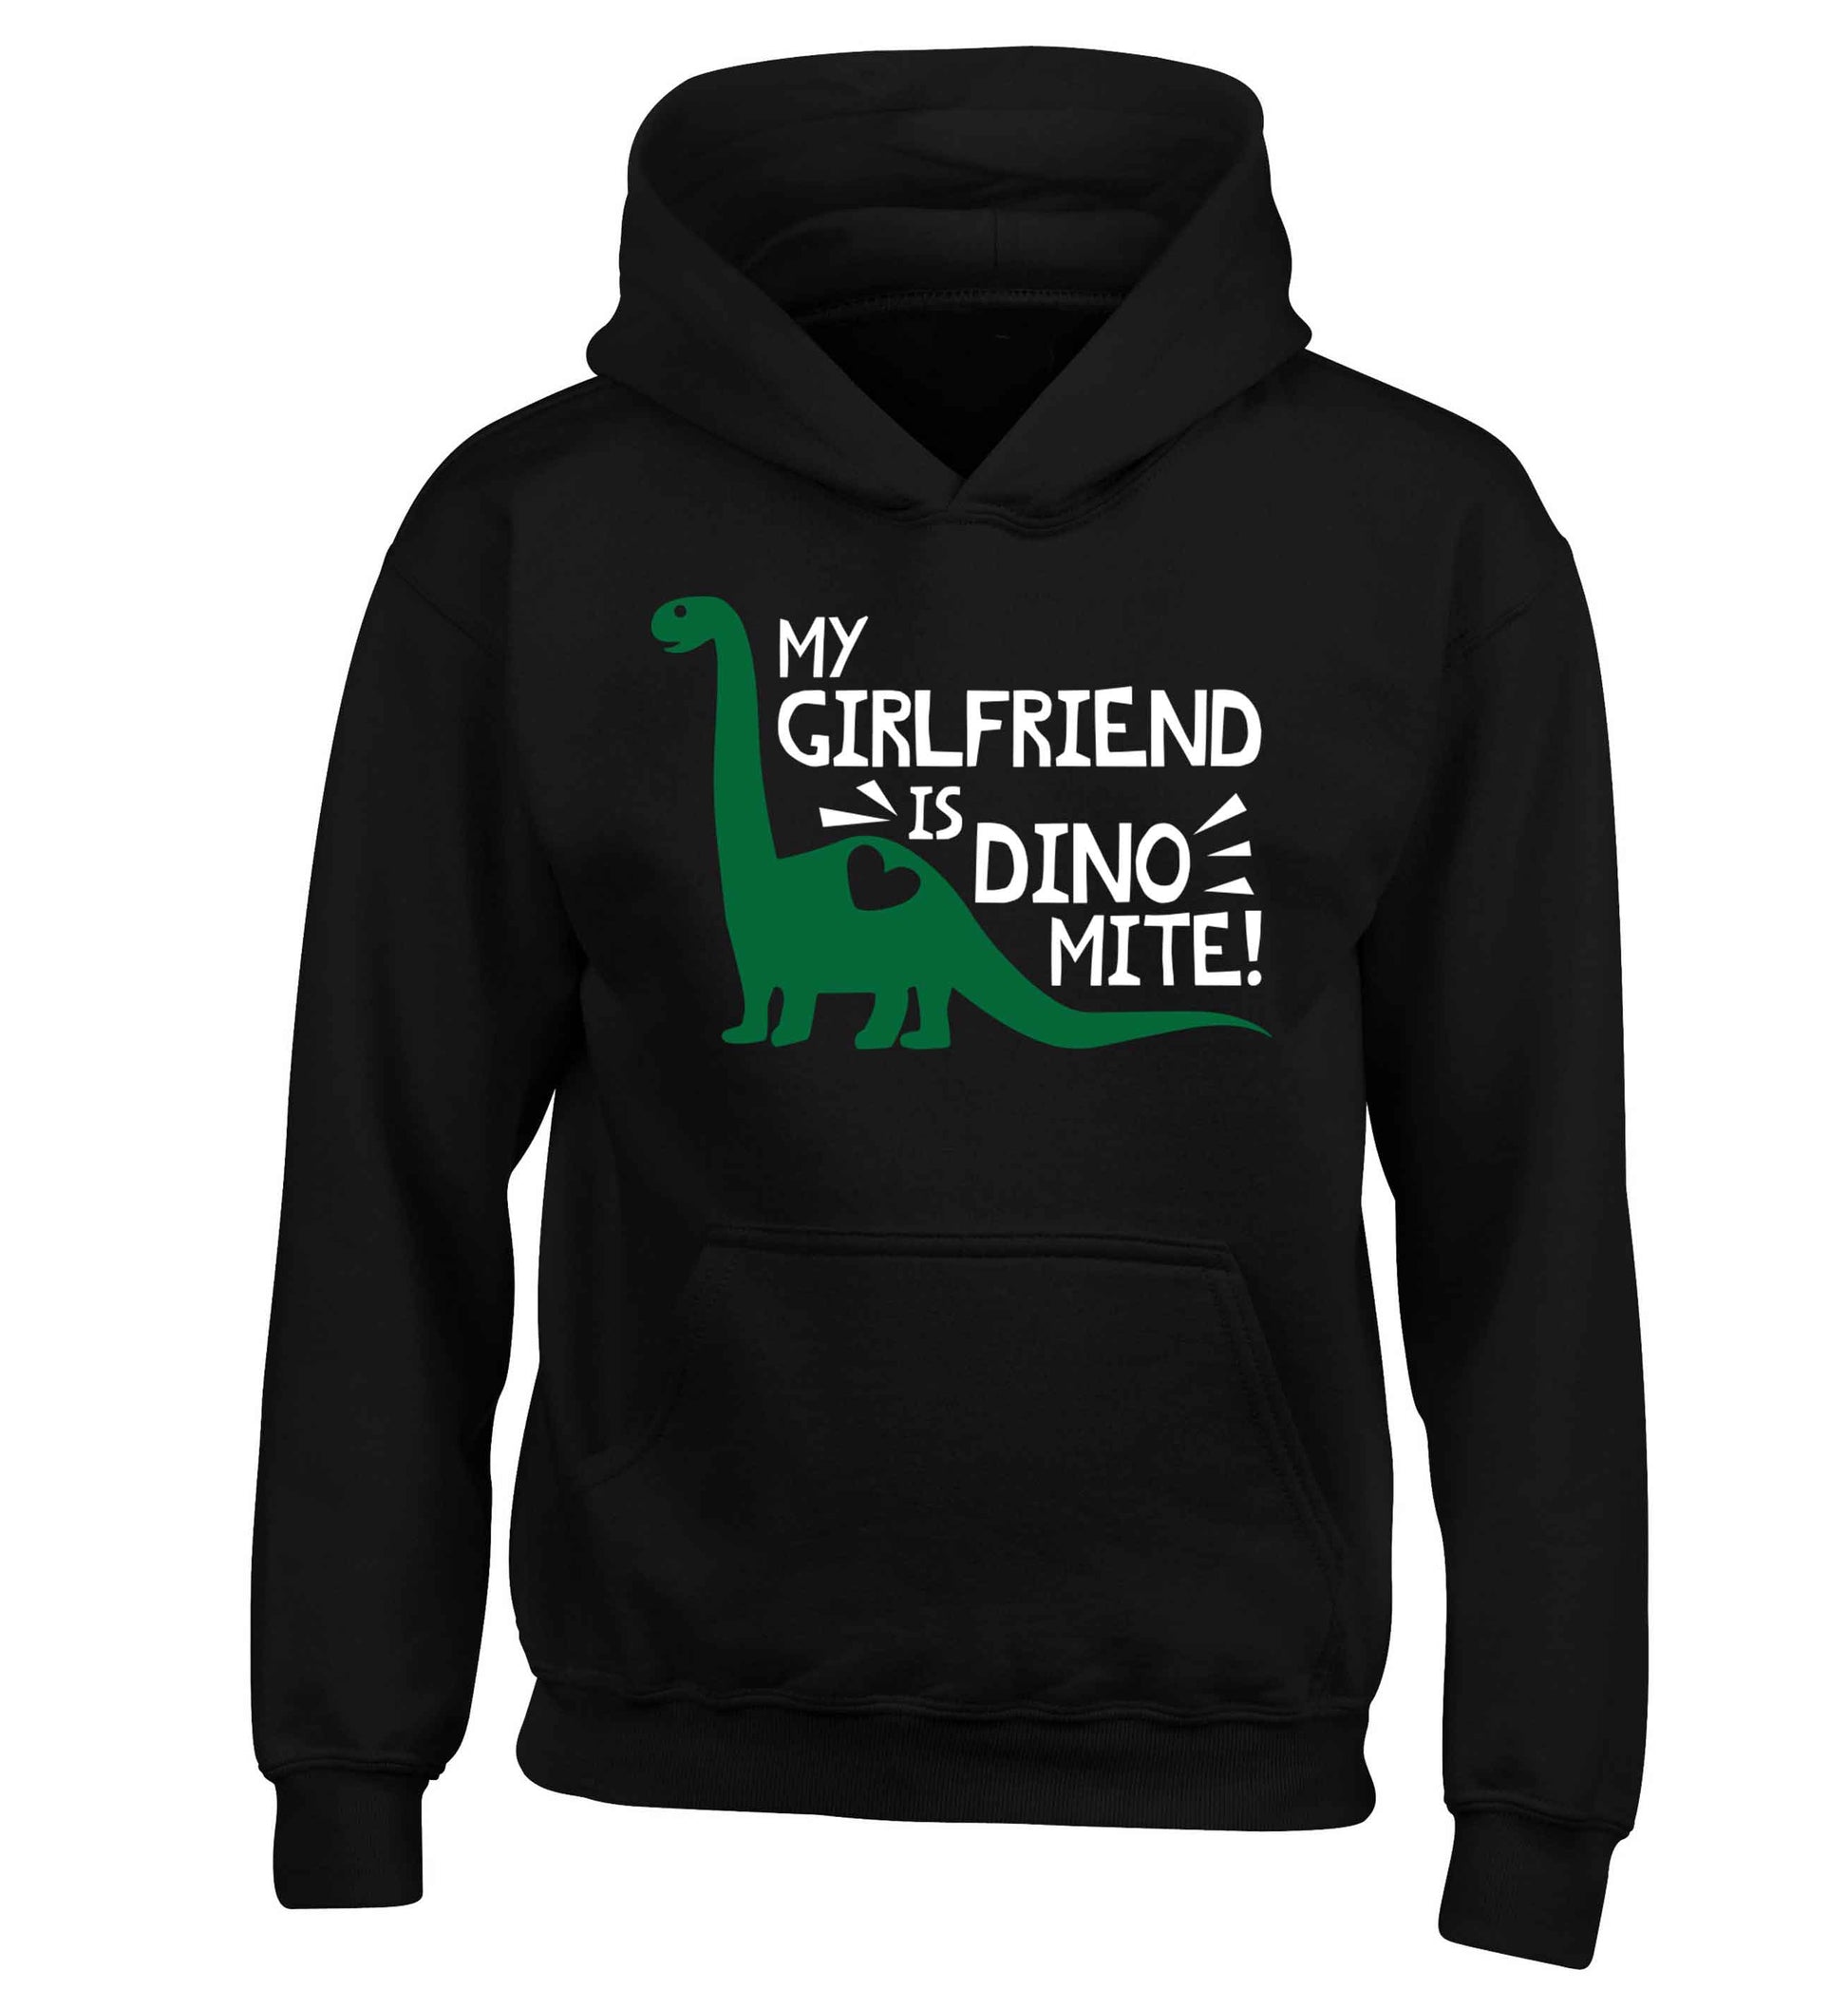 My girlfriend is dinomite! children's black hoodie 12-13 Years